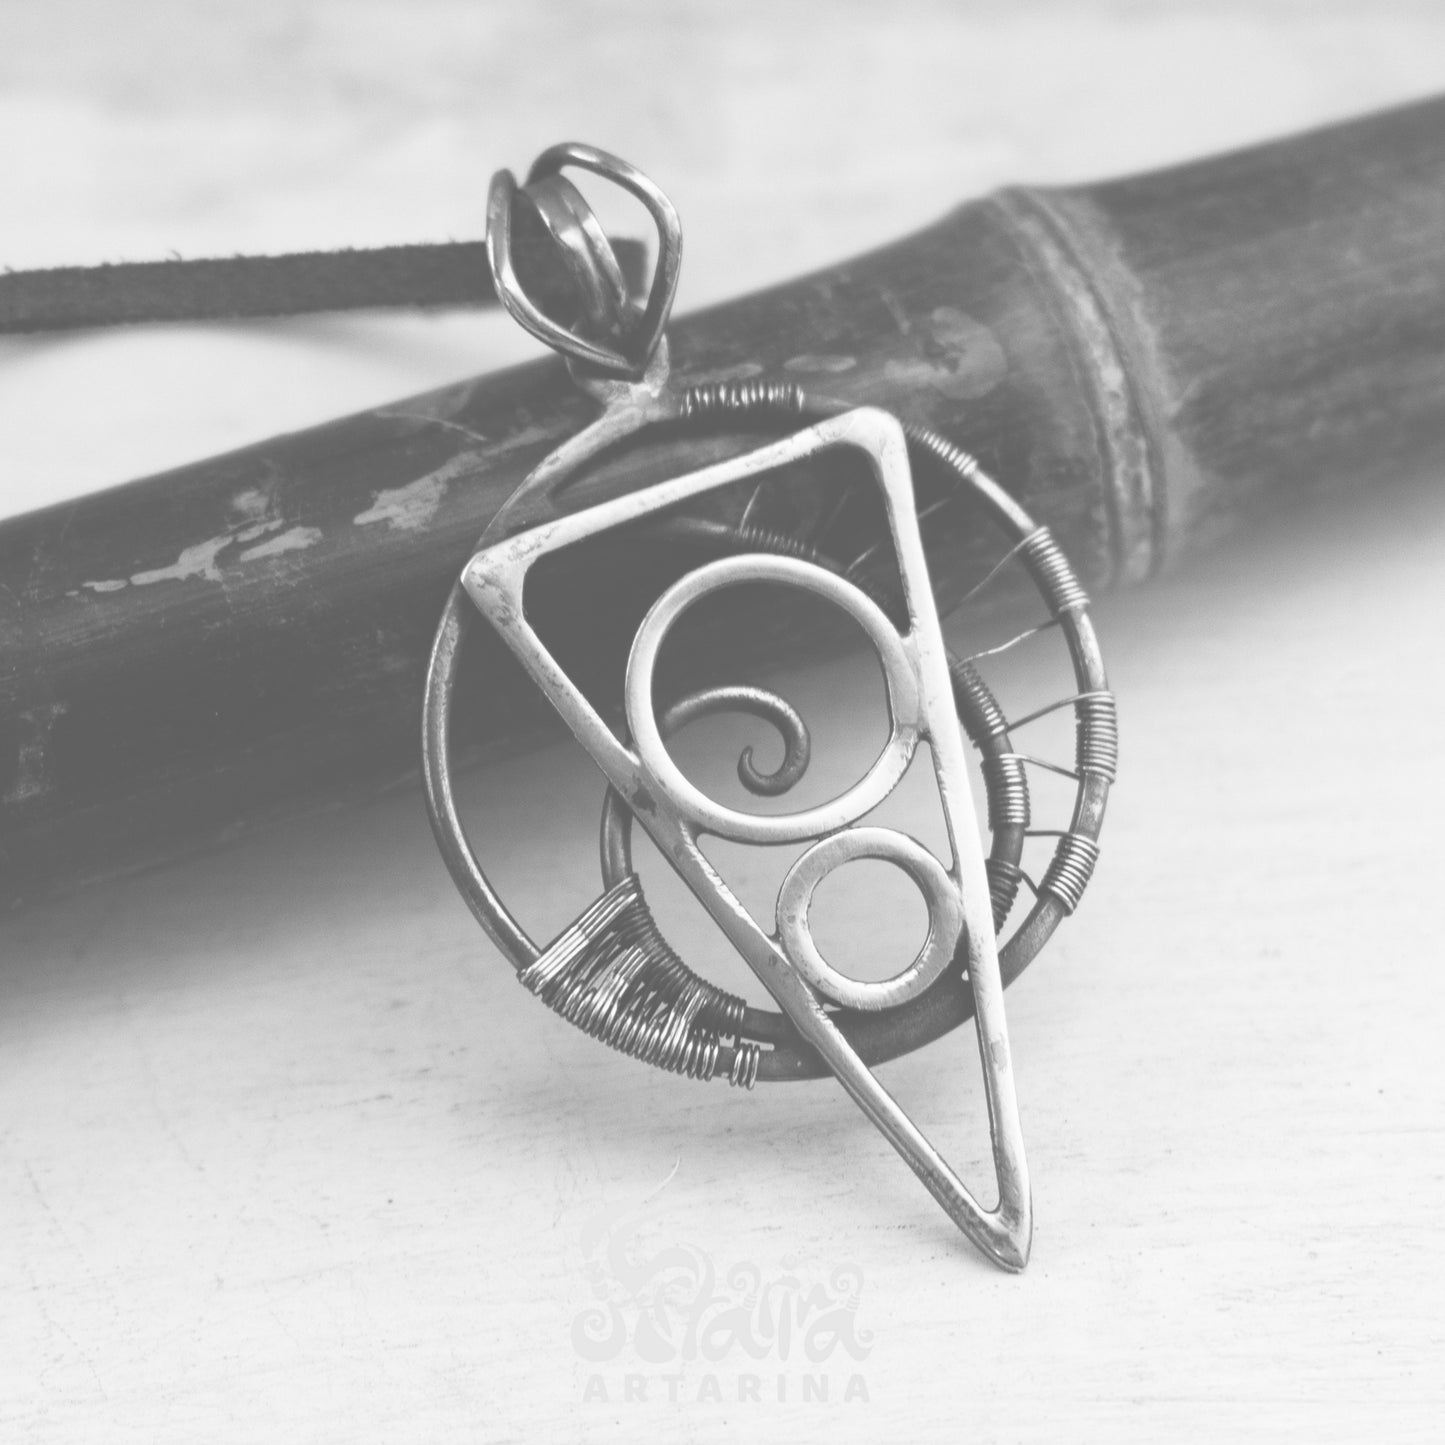 Alchemical Amulet, Mythical Necklace, Esoteric Talisman, Magical Symbol, Sacred Pendant, Alchemy Pendant, Hermetic Talisman